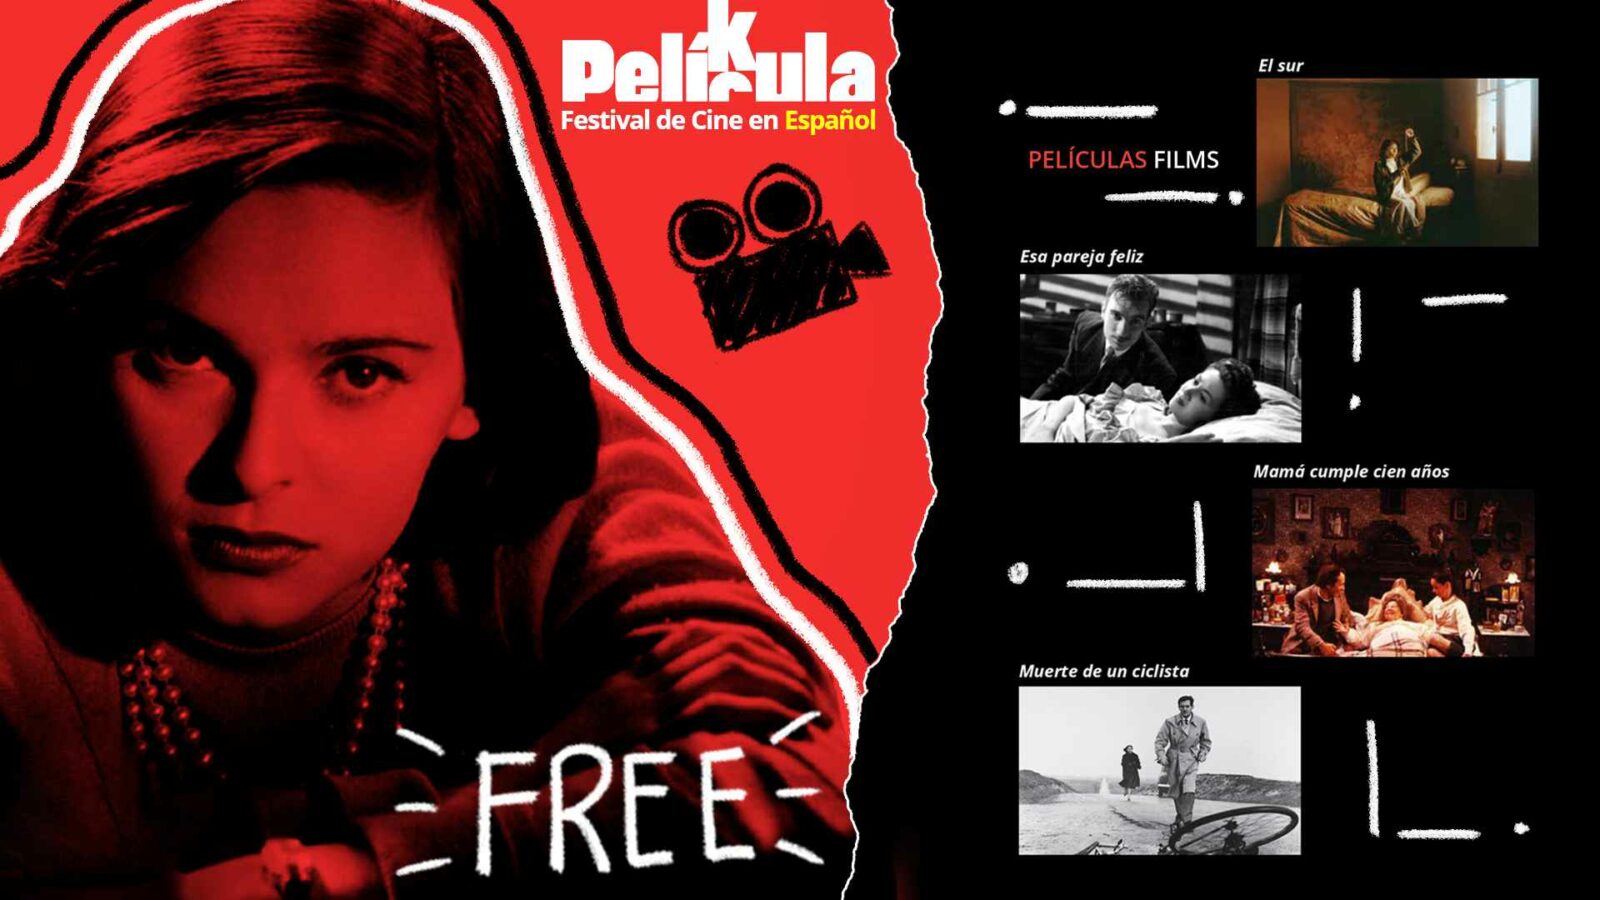 pelikula film festival free